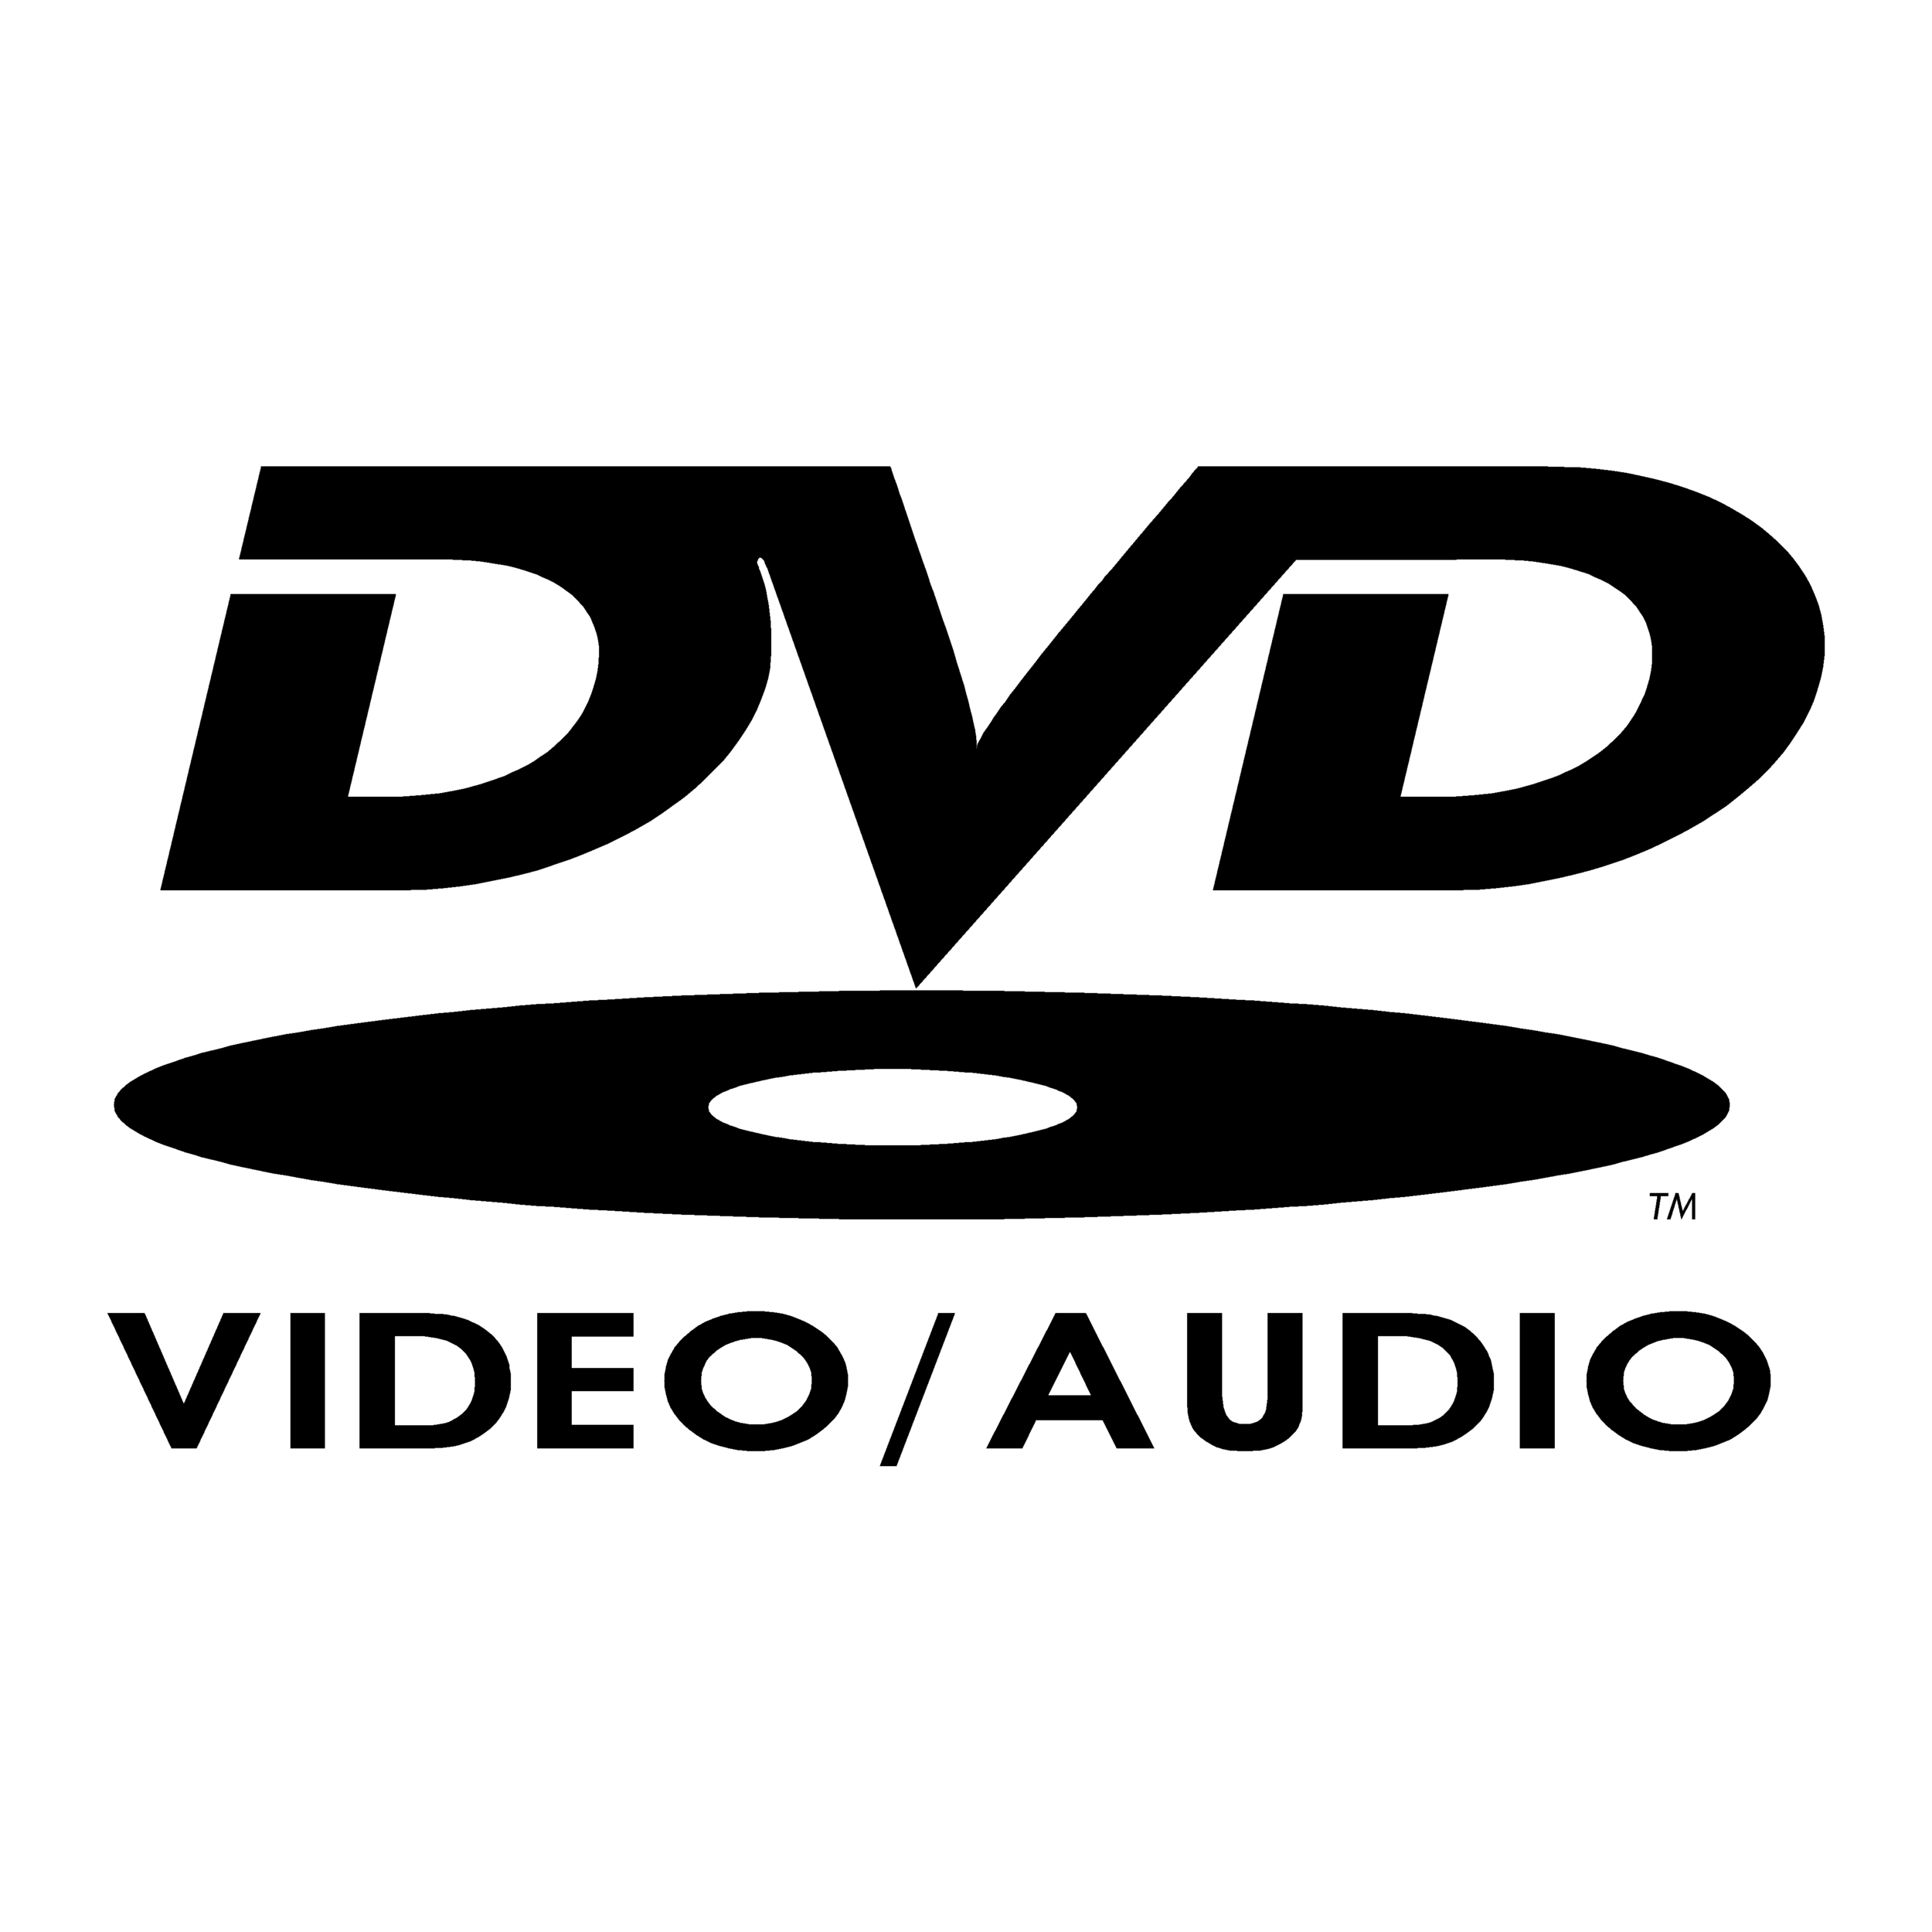 sticker dvd audio video ref 1 tuning audio sonorisation car auto moto camion competition deco rallye autocollant